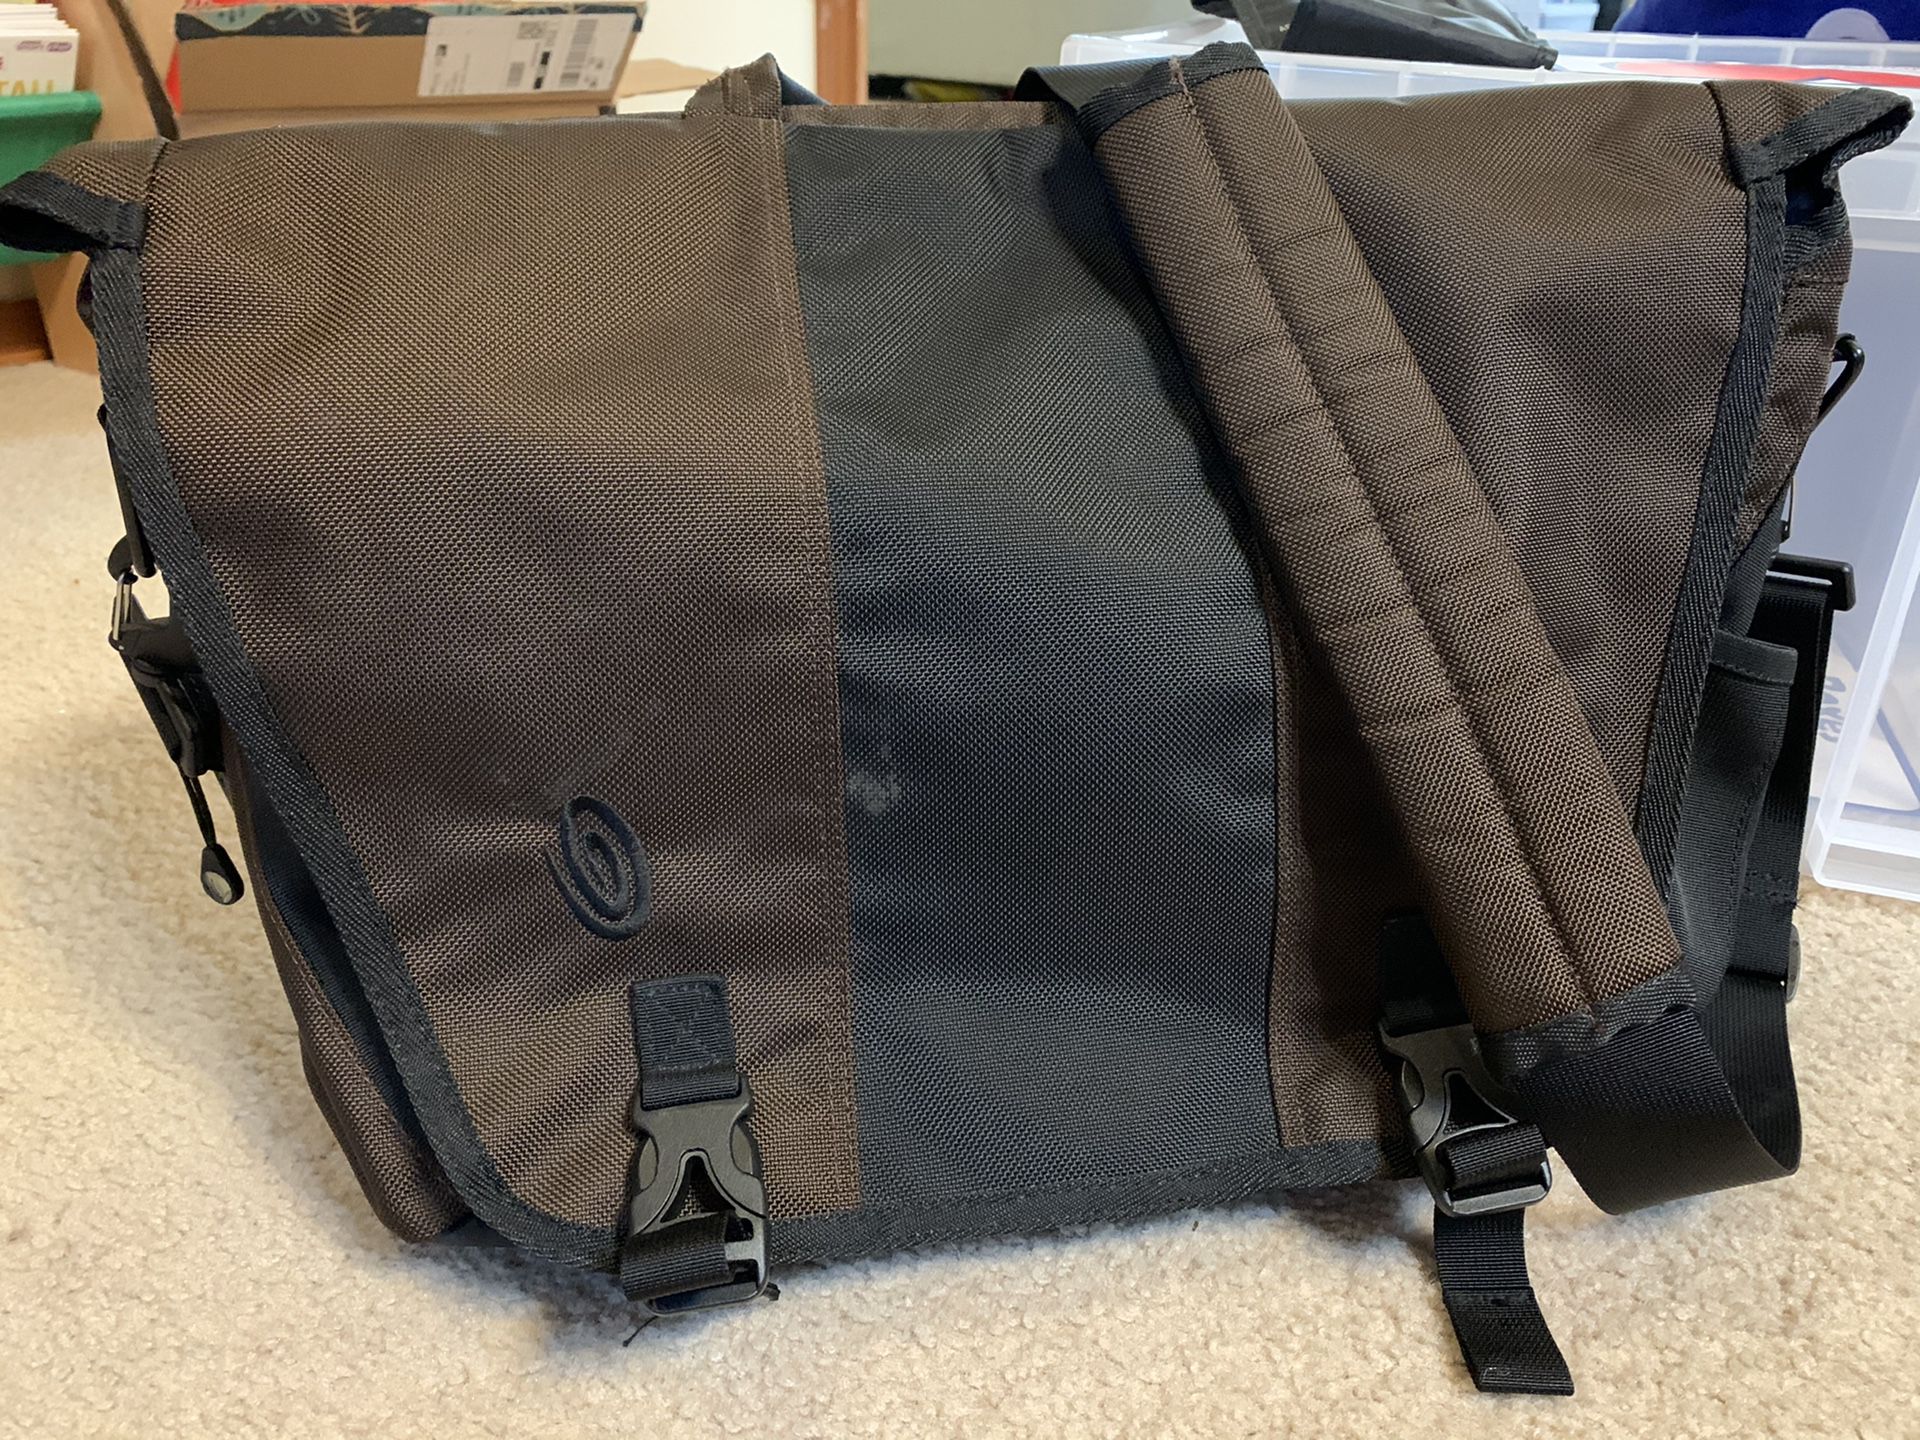 TIMBUK2 Laptop Bag (fits 17” laptop)